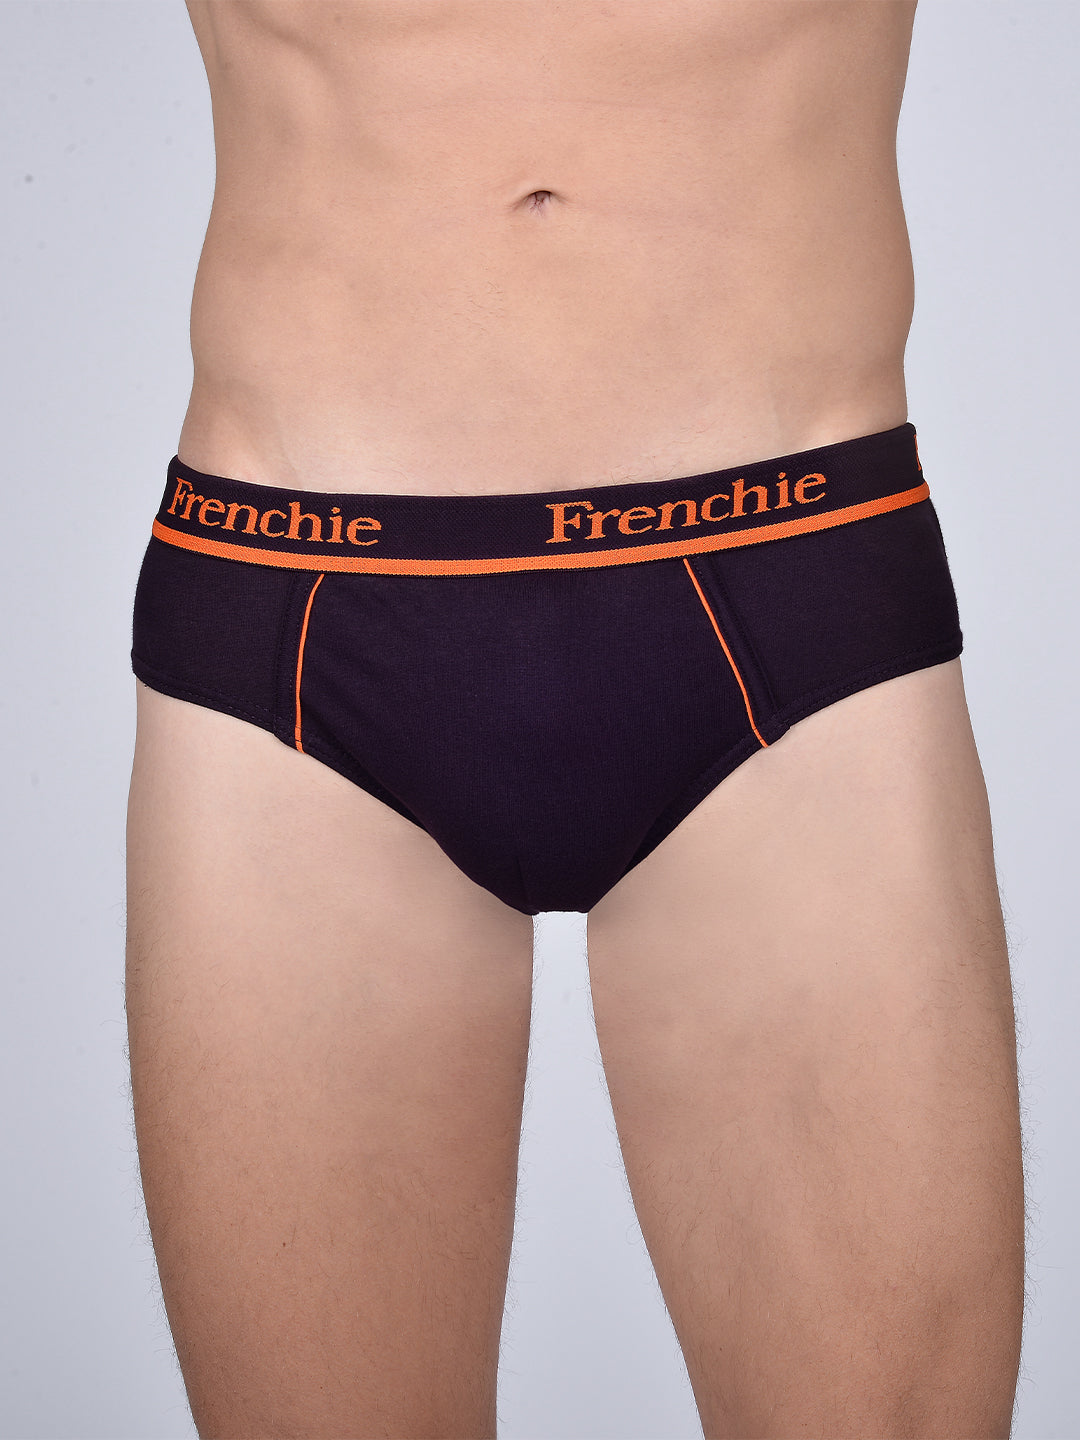 Buy VIP Frenchie Pro Men's Underwear (Size-110 cm, Assorted Colour